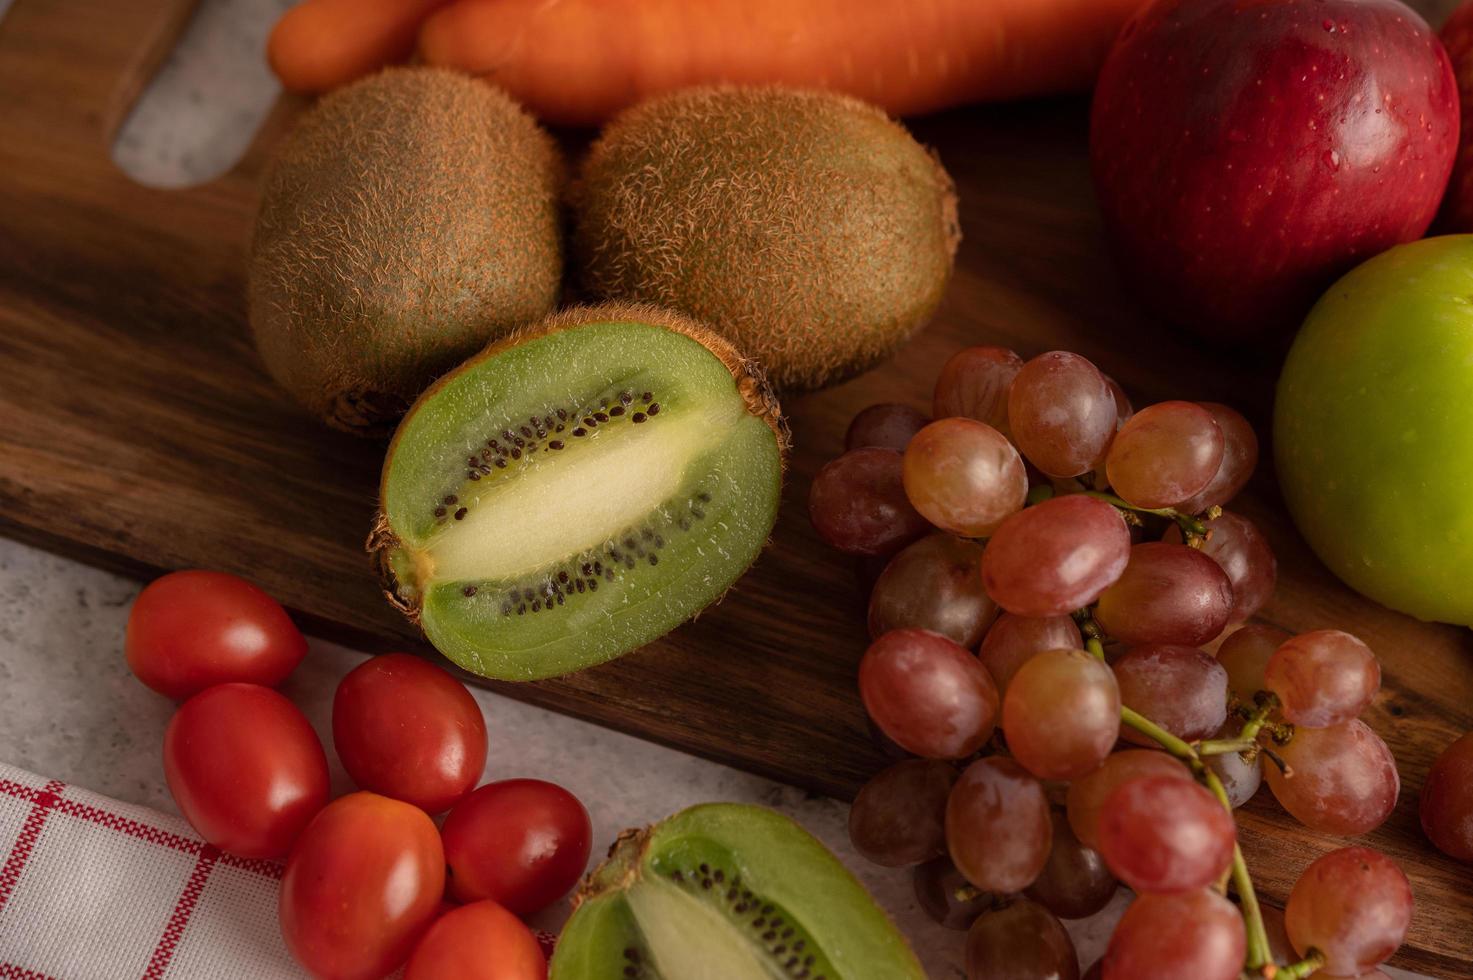 Kiwi, grapes, apples, carrots, and tomatoes close-up photo